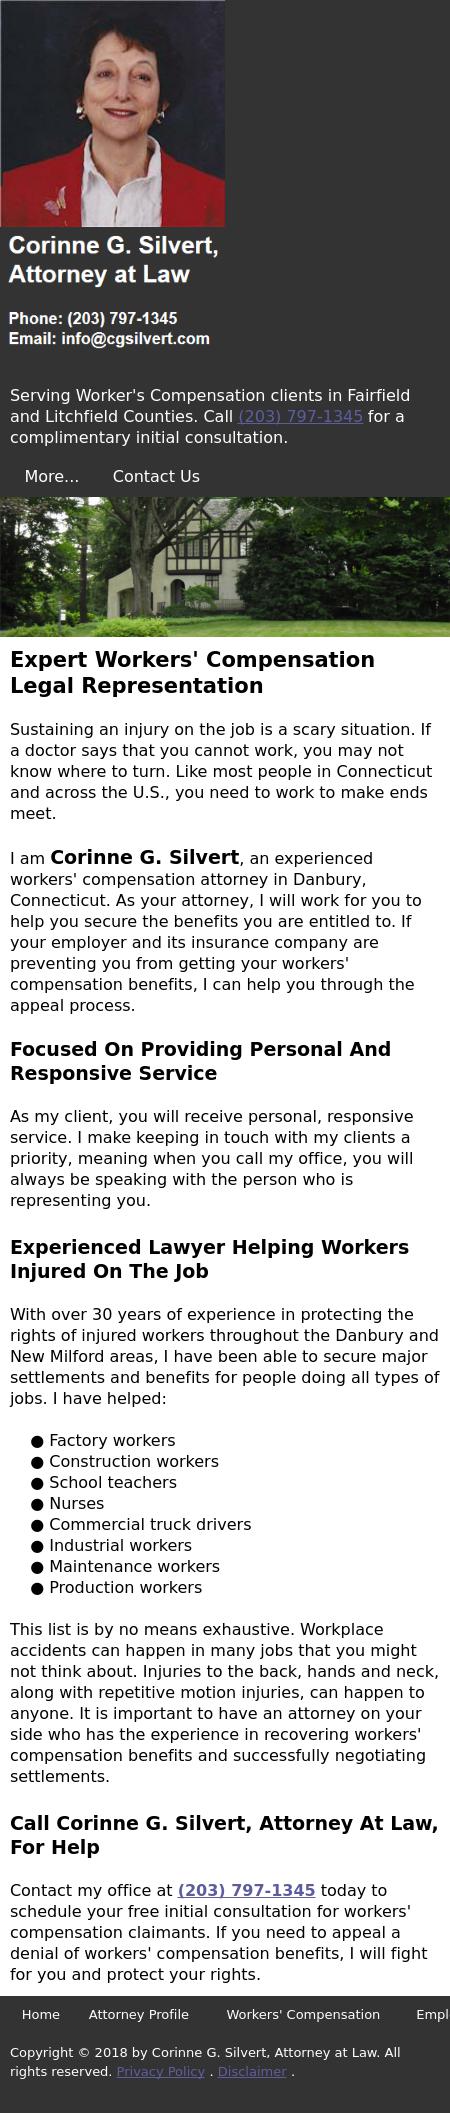 Corinne G. Silvert, Attorney at Law - Danbury CT Lawyers